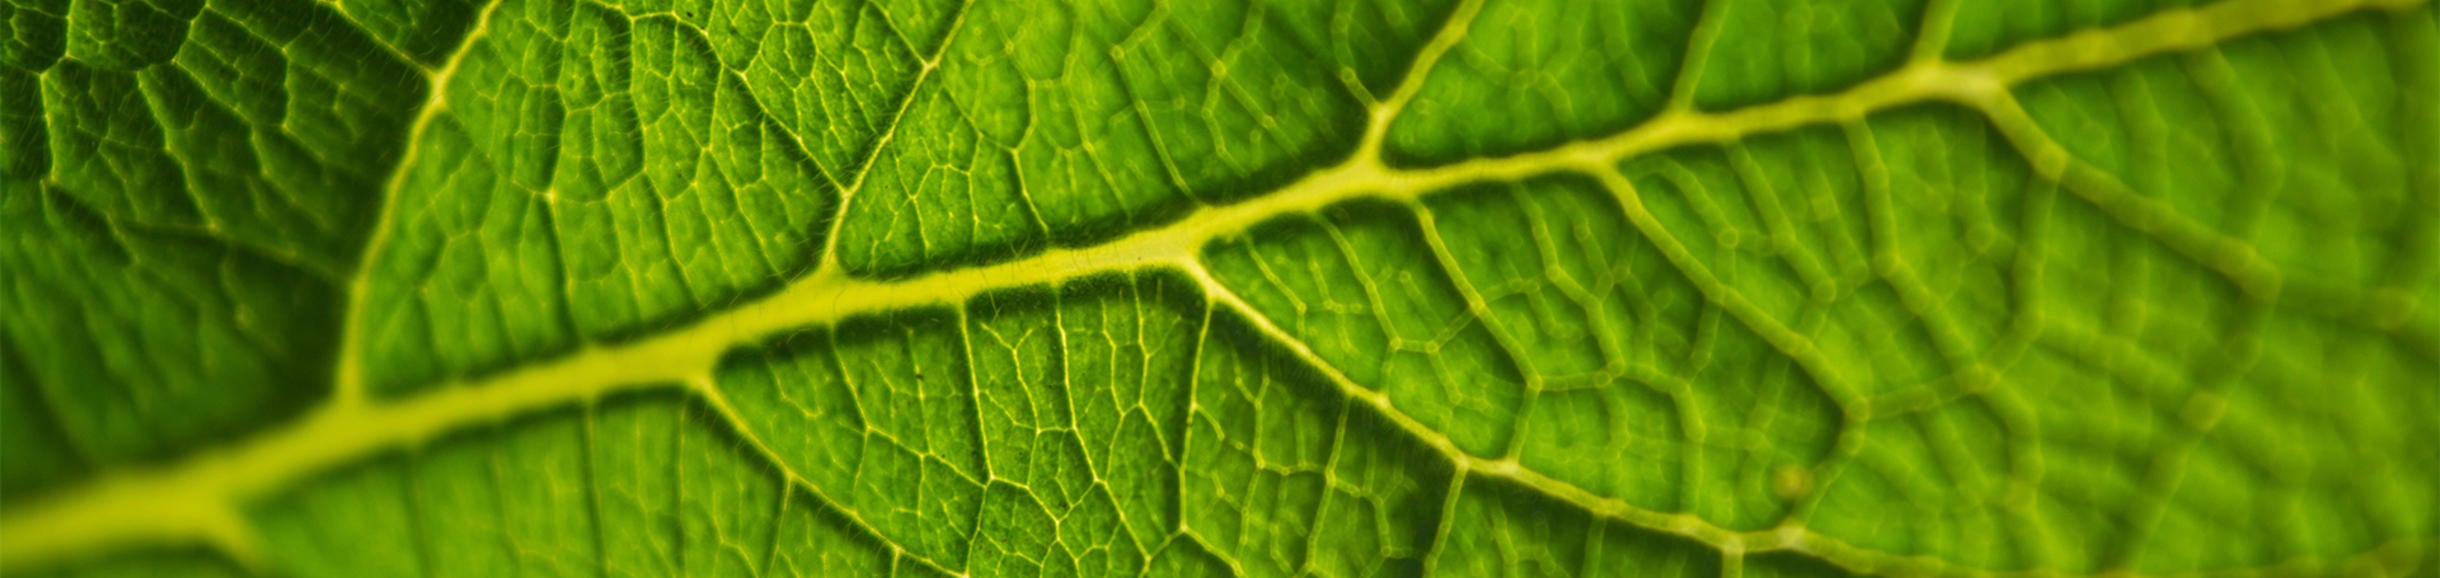 leaf closeup (c) Rodion Kutsaev unsplash